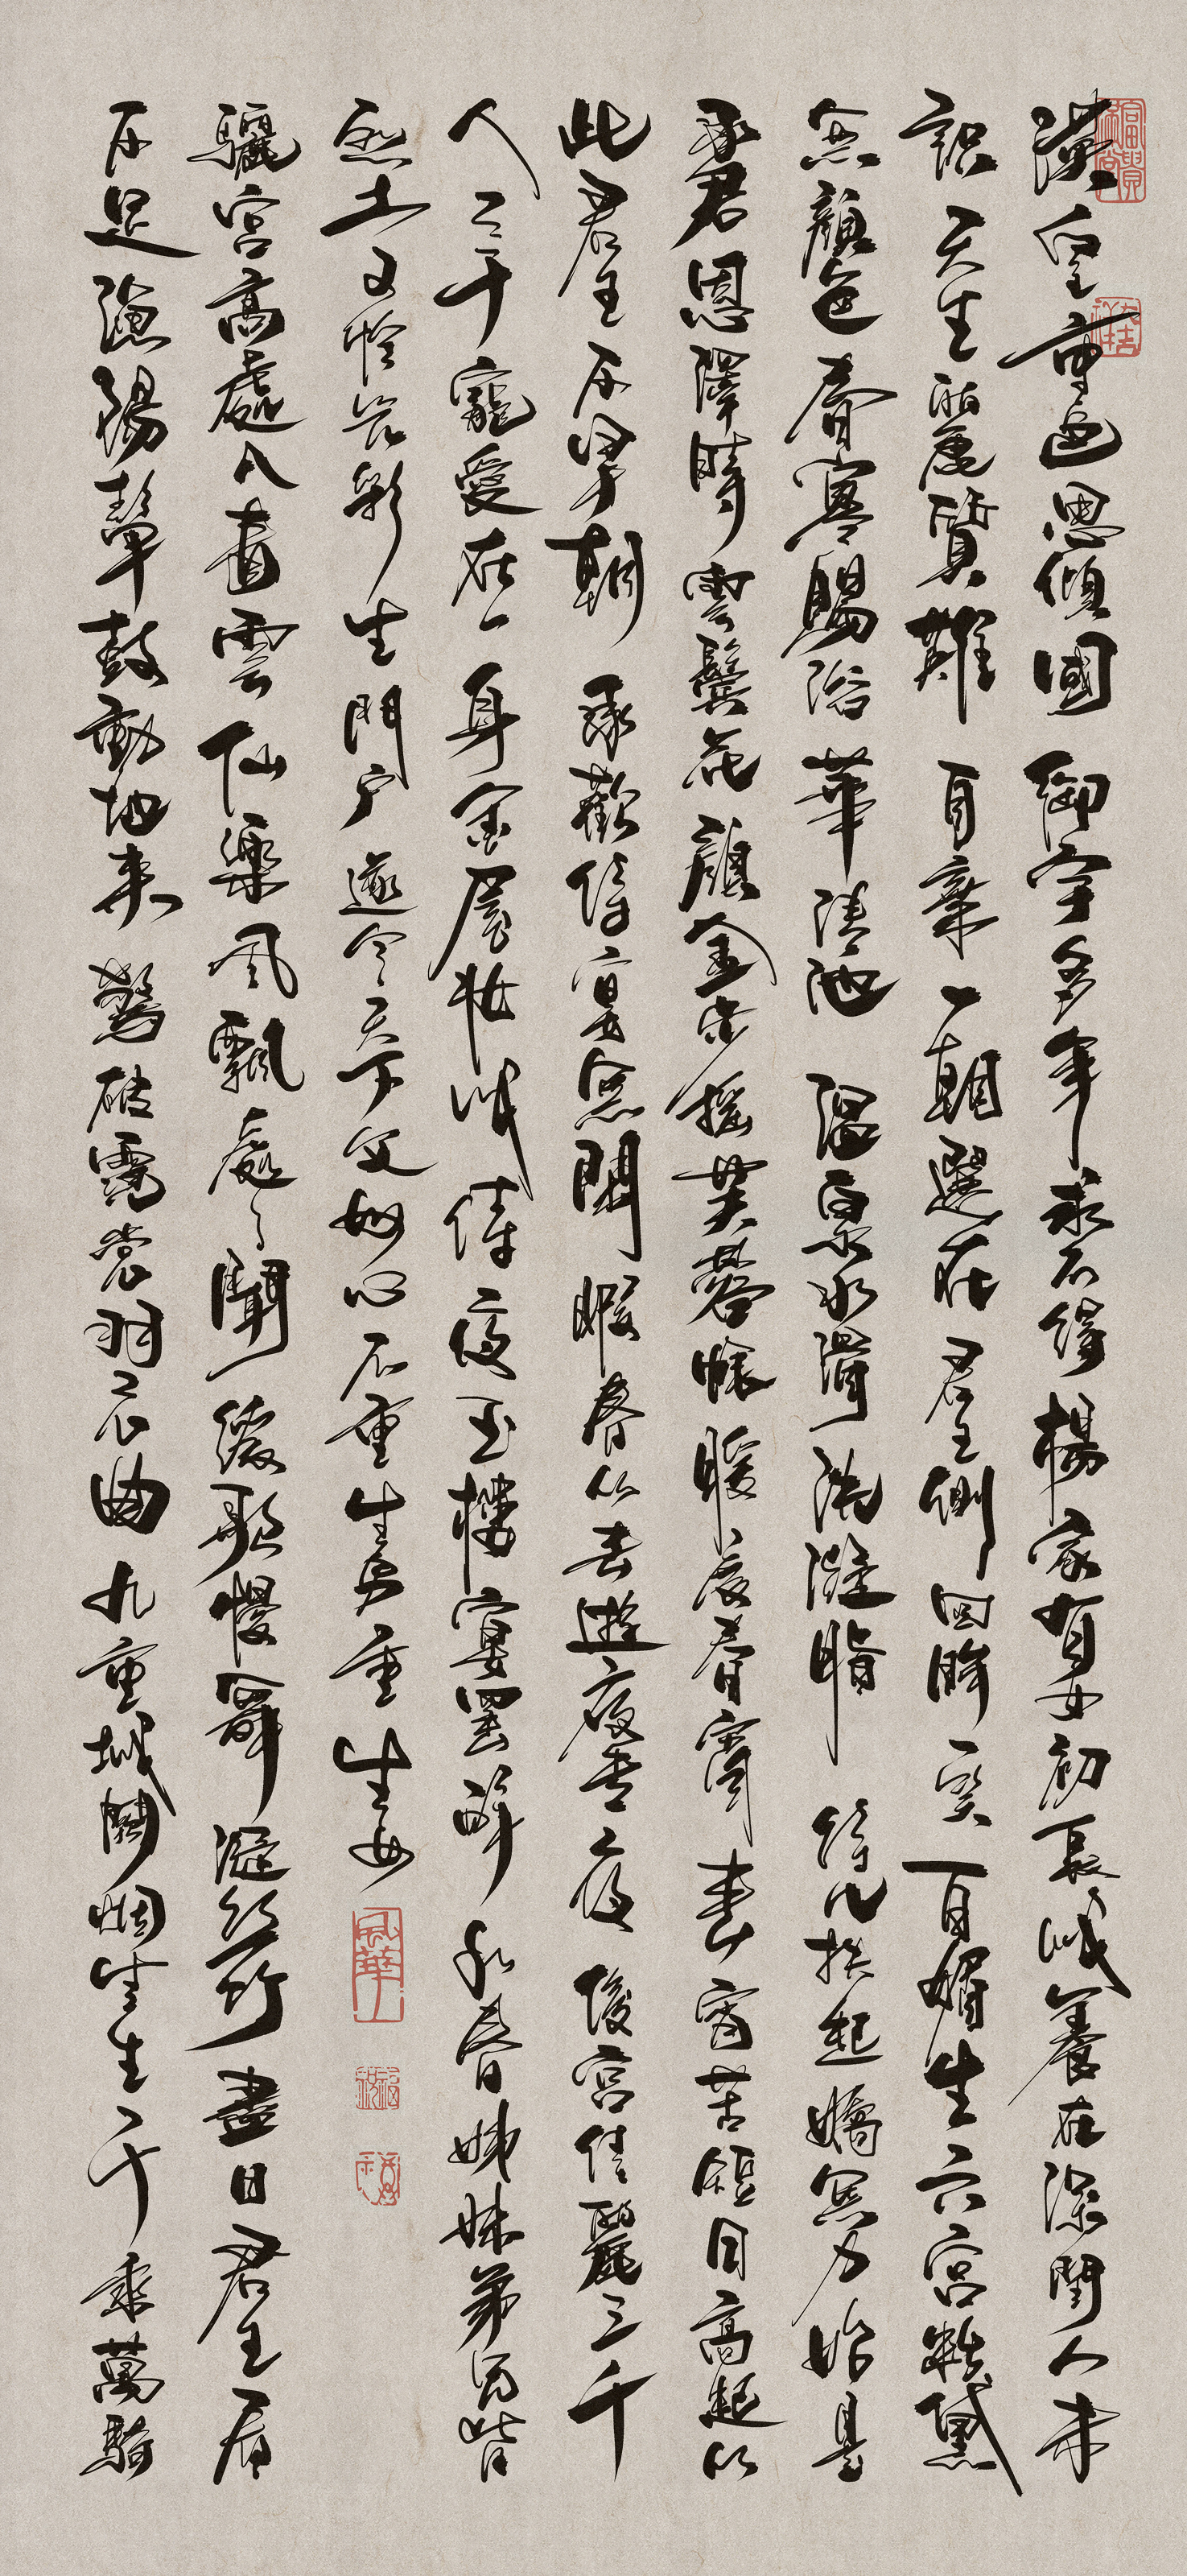 Interesting Chinese Creative Handwritten Font Design- Long Regret